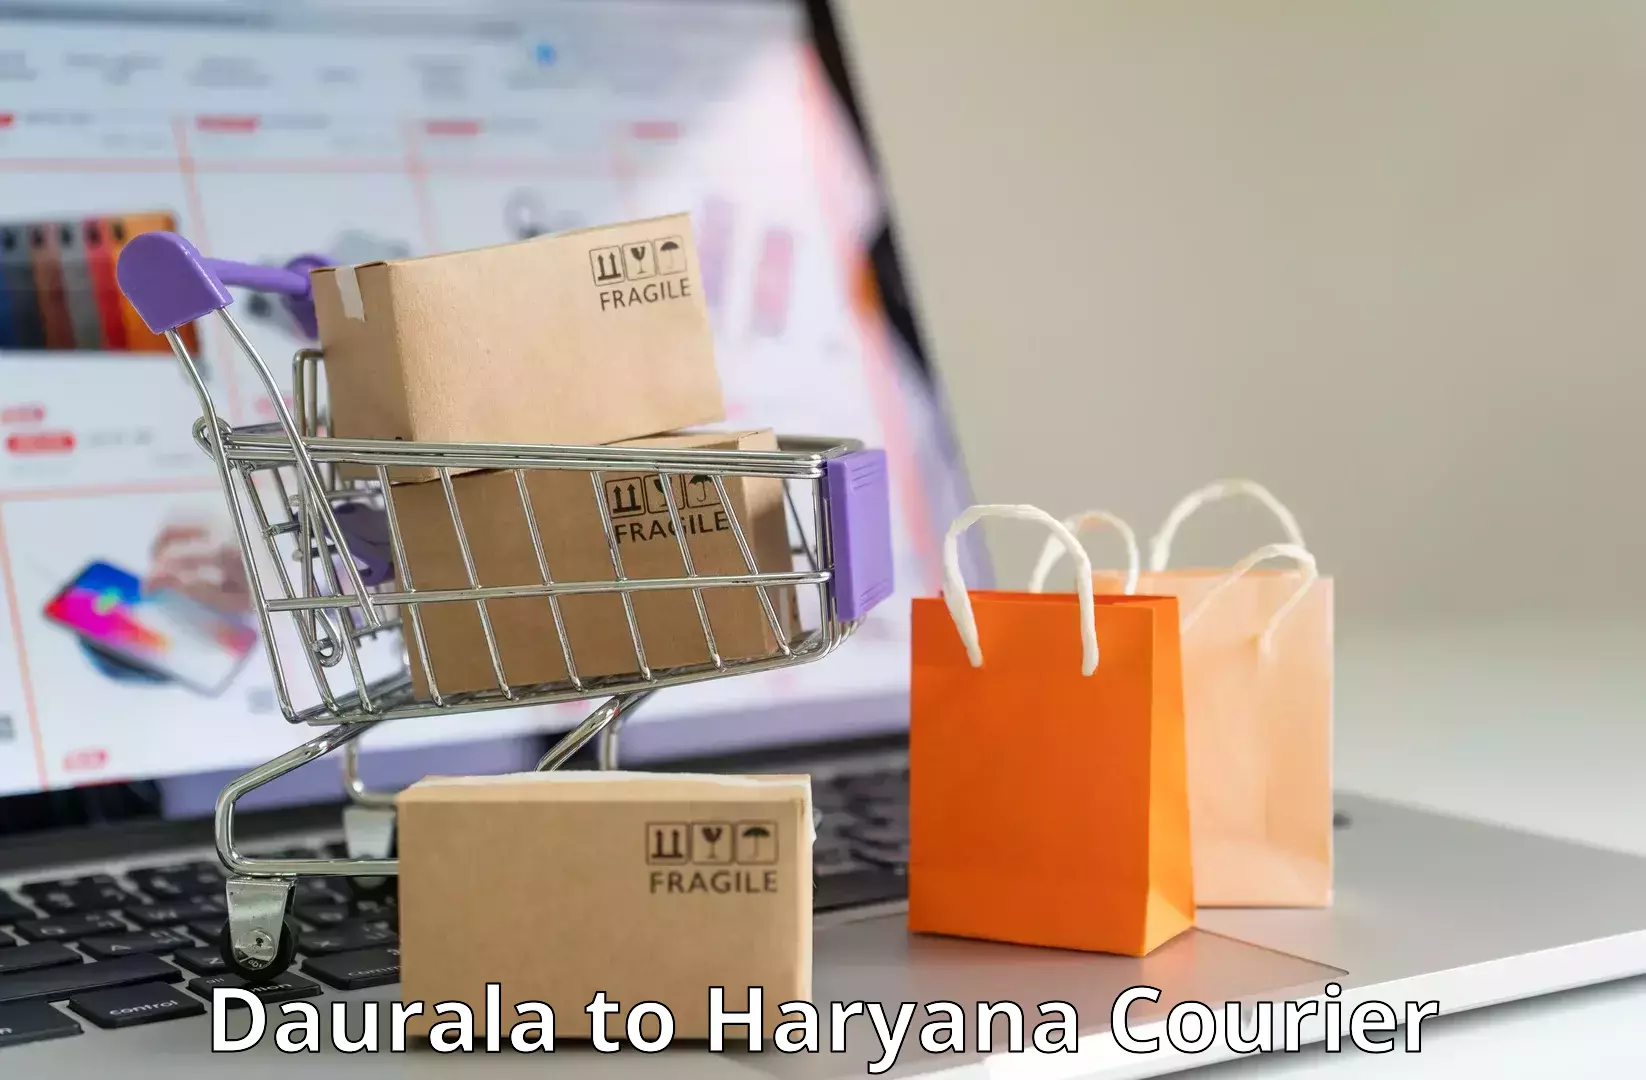 Digital courier platforms Daurala to Gurugram